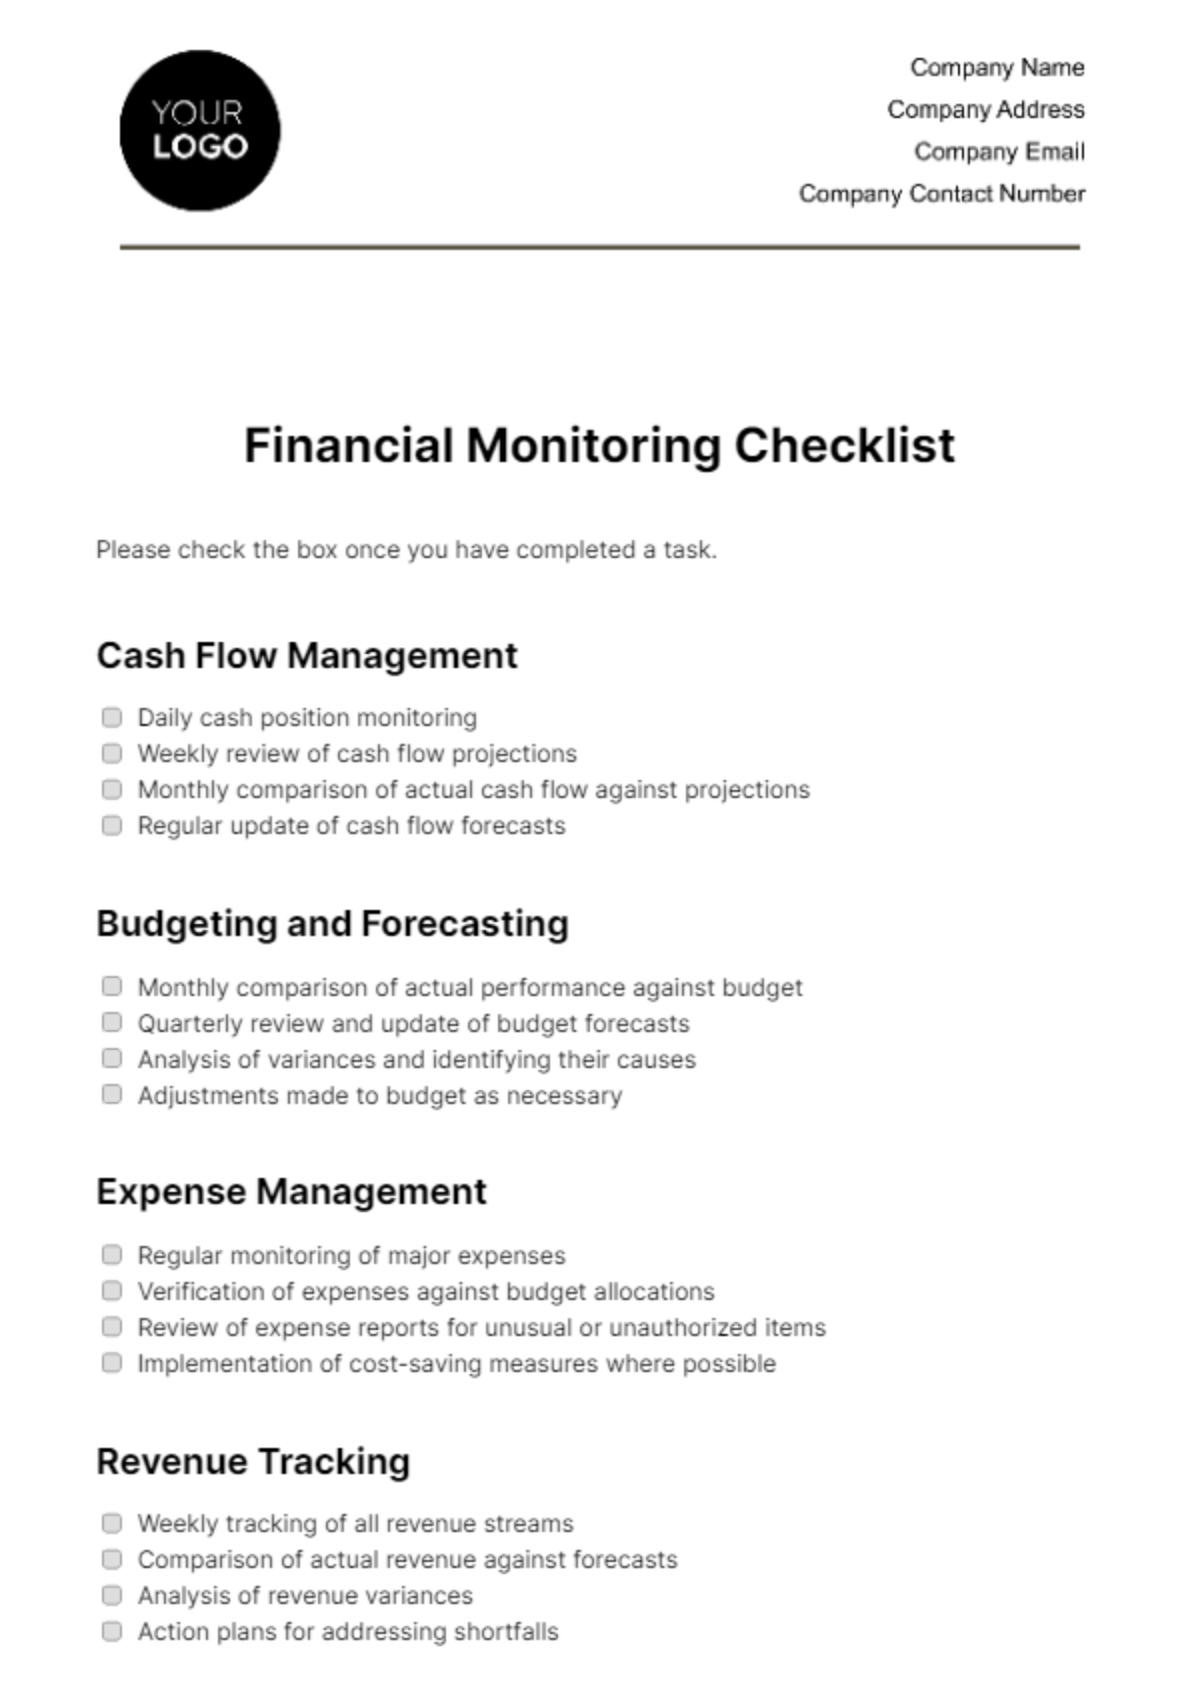 Financial Monitoring Checklist Template